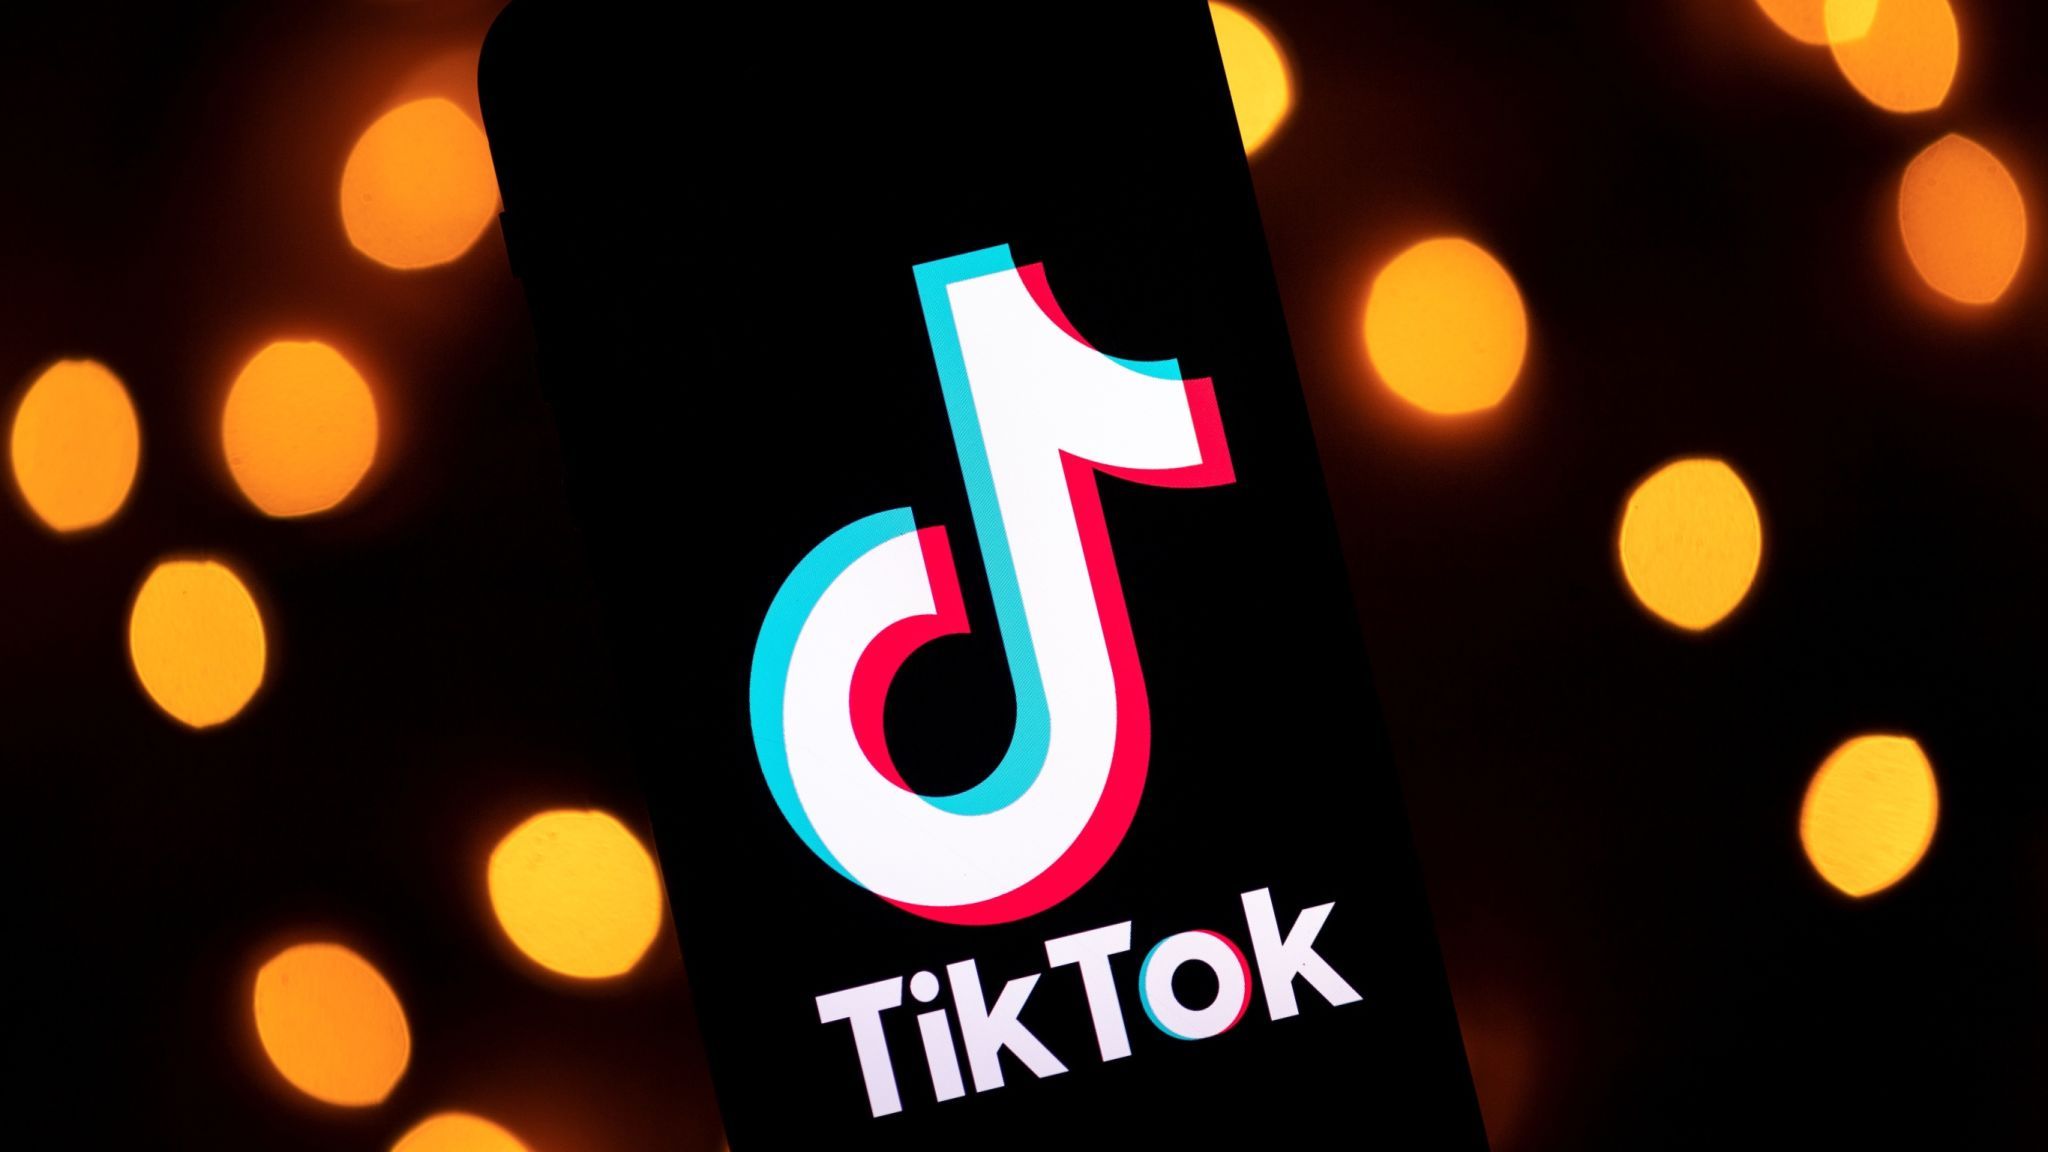 TikTok has a ketamine problem. Science & Tech News